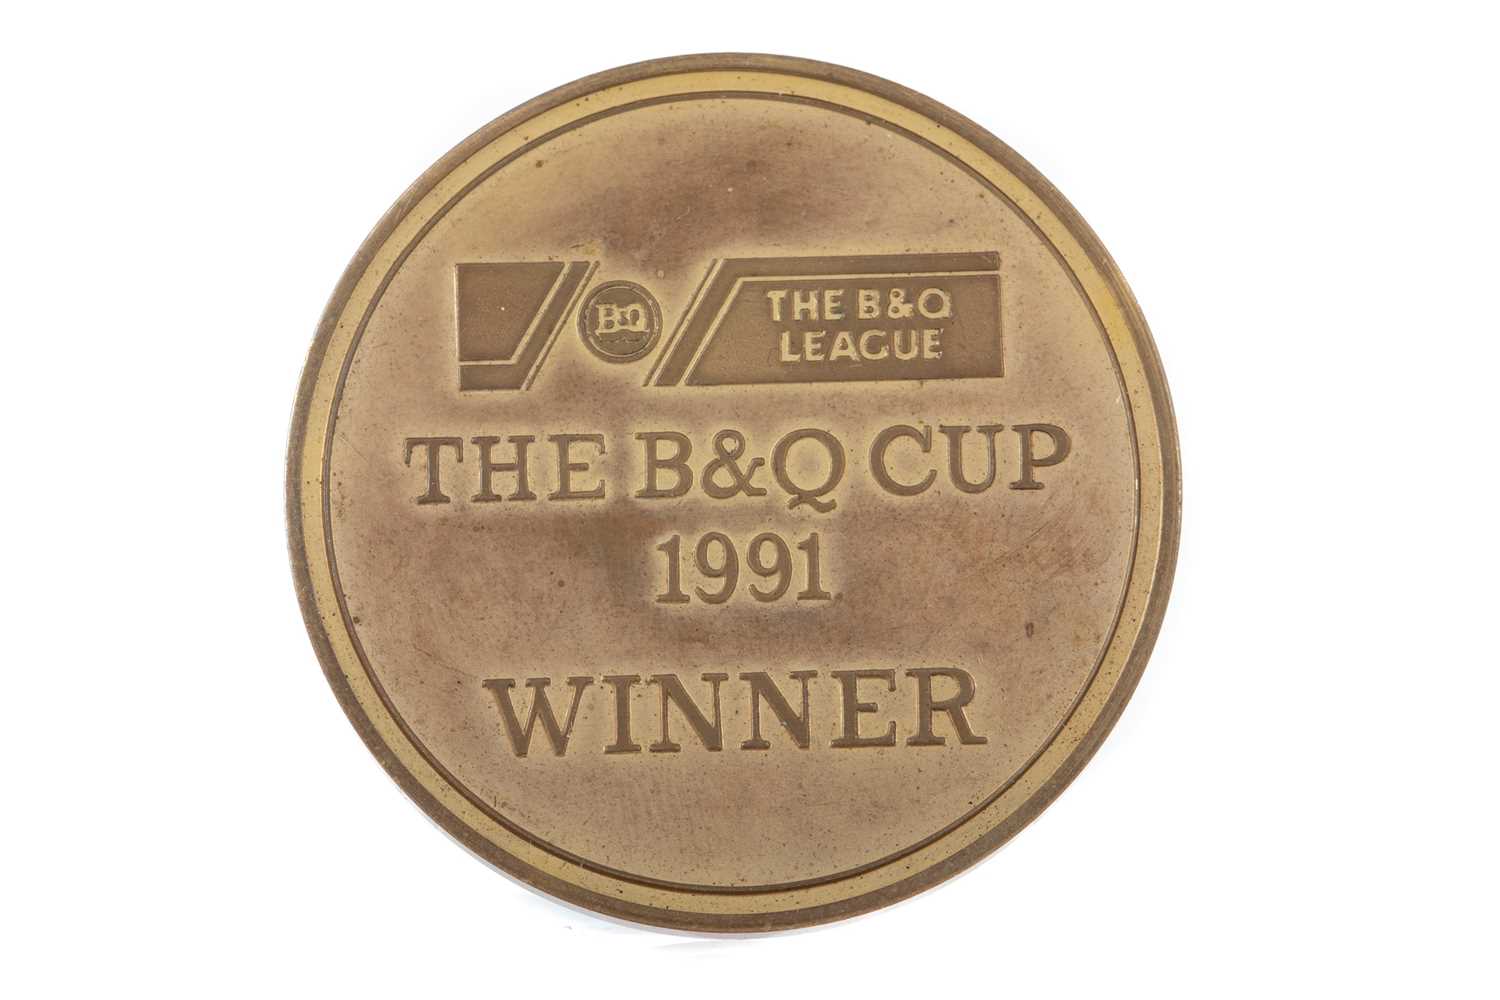 THE B&Q CUP WINNERS GILT MEDAL 1991